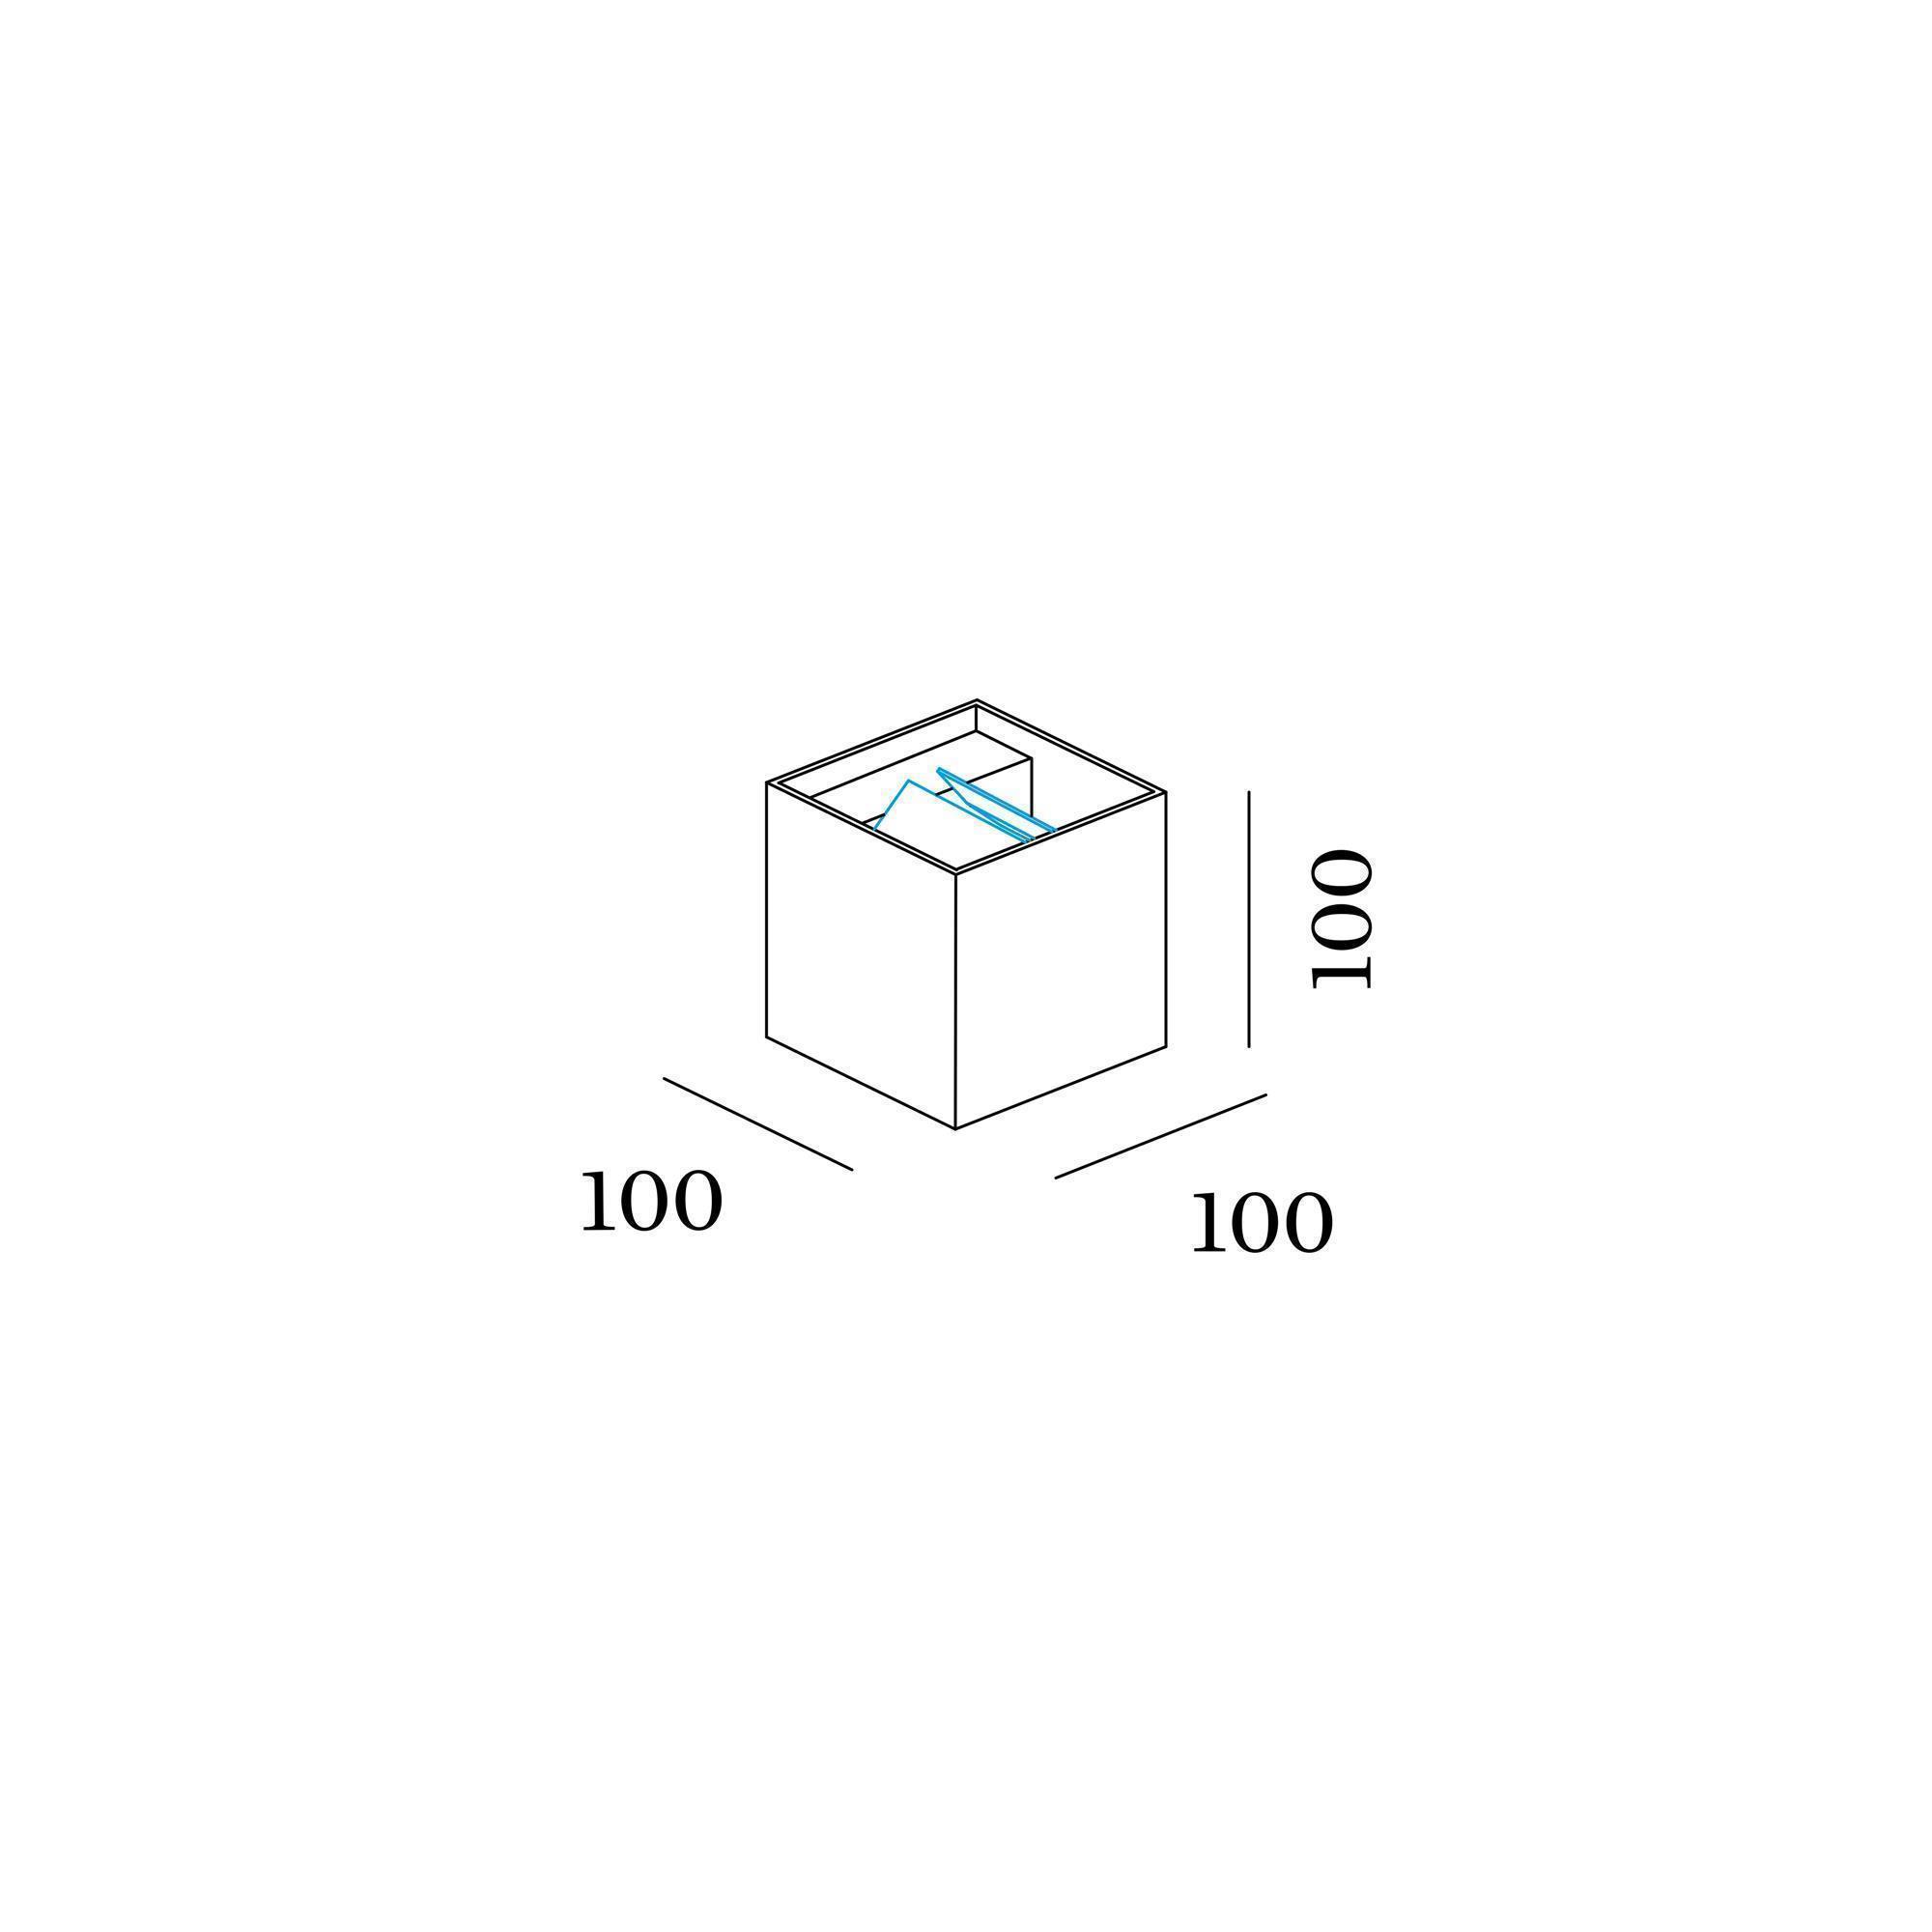 box_wall_surface_1.0_qt14